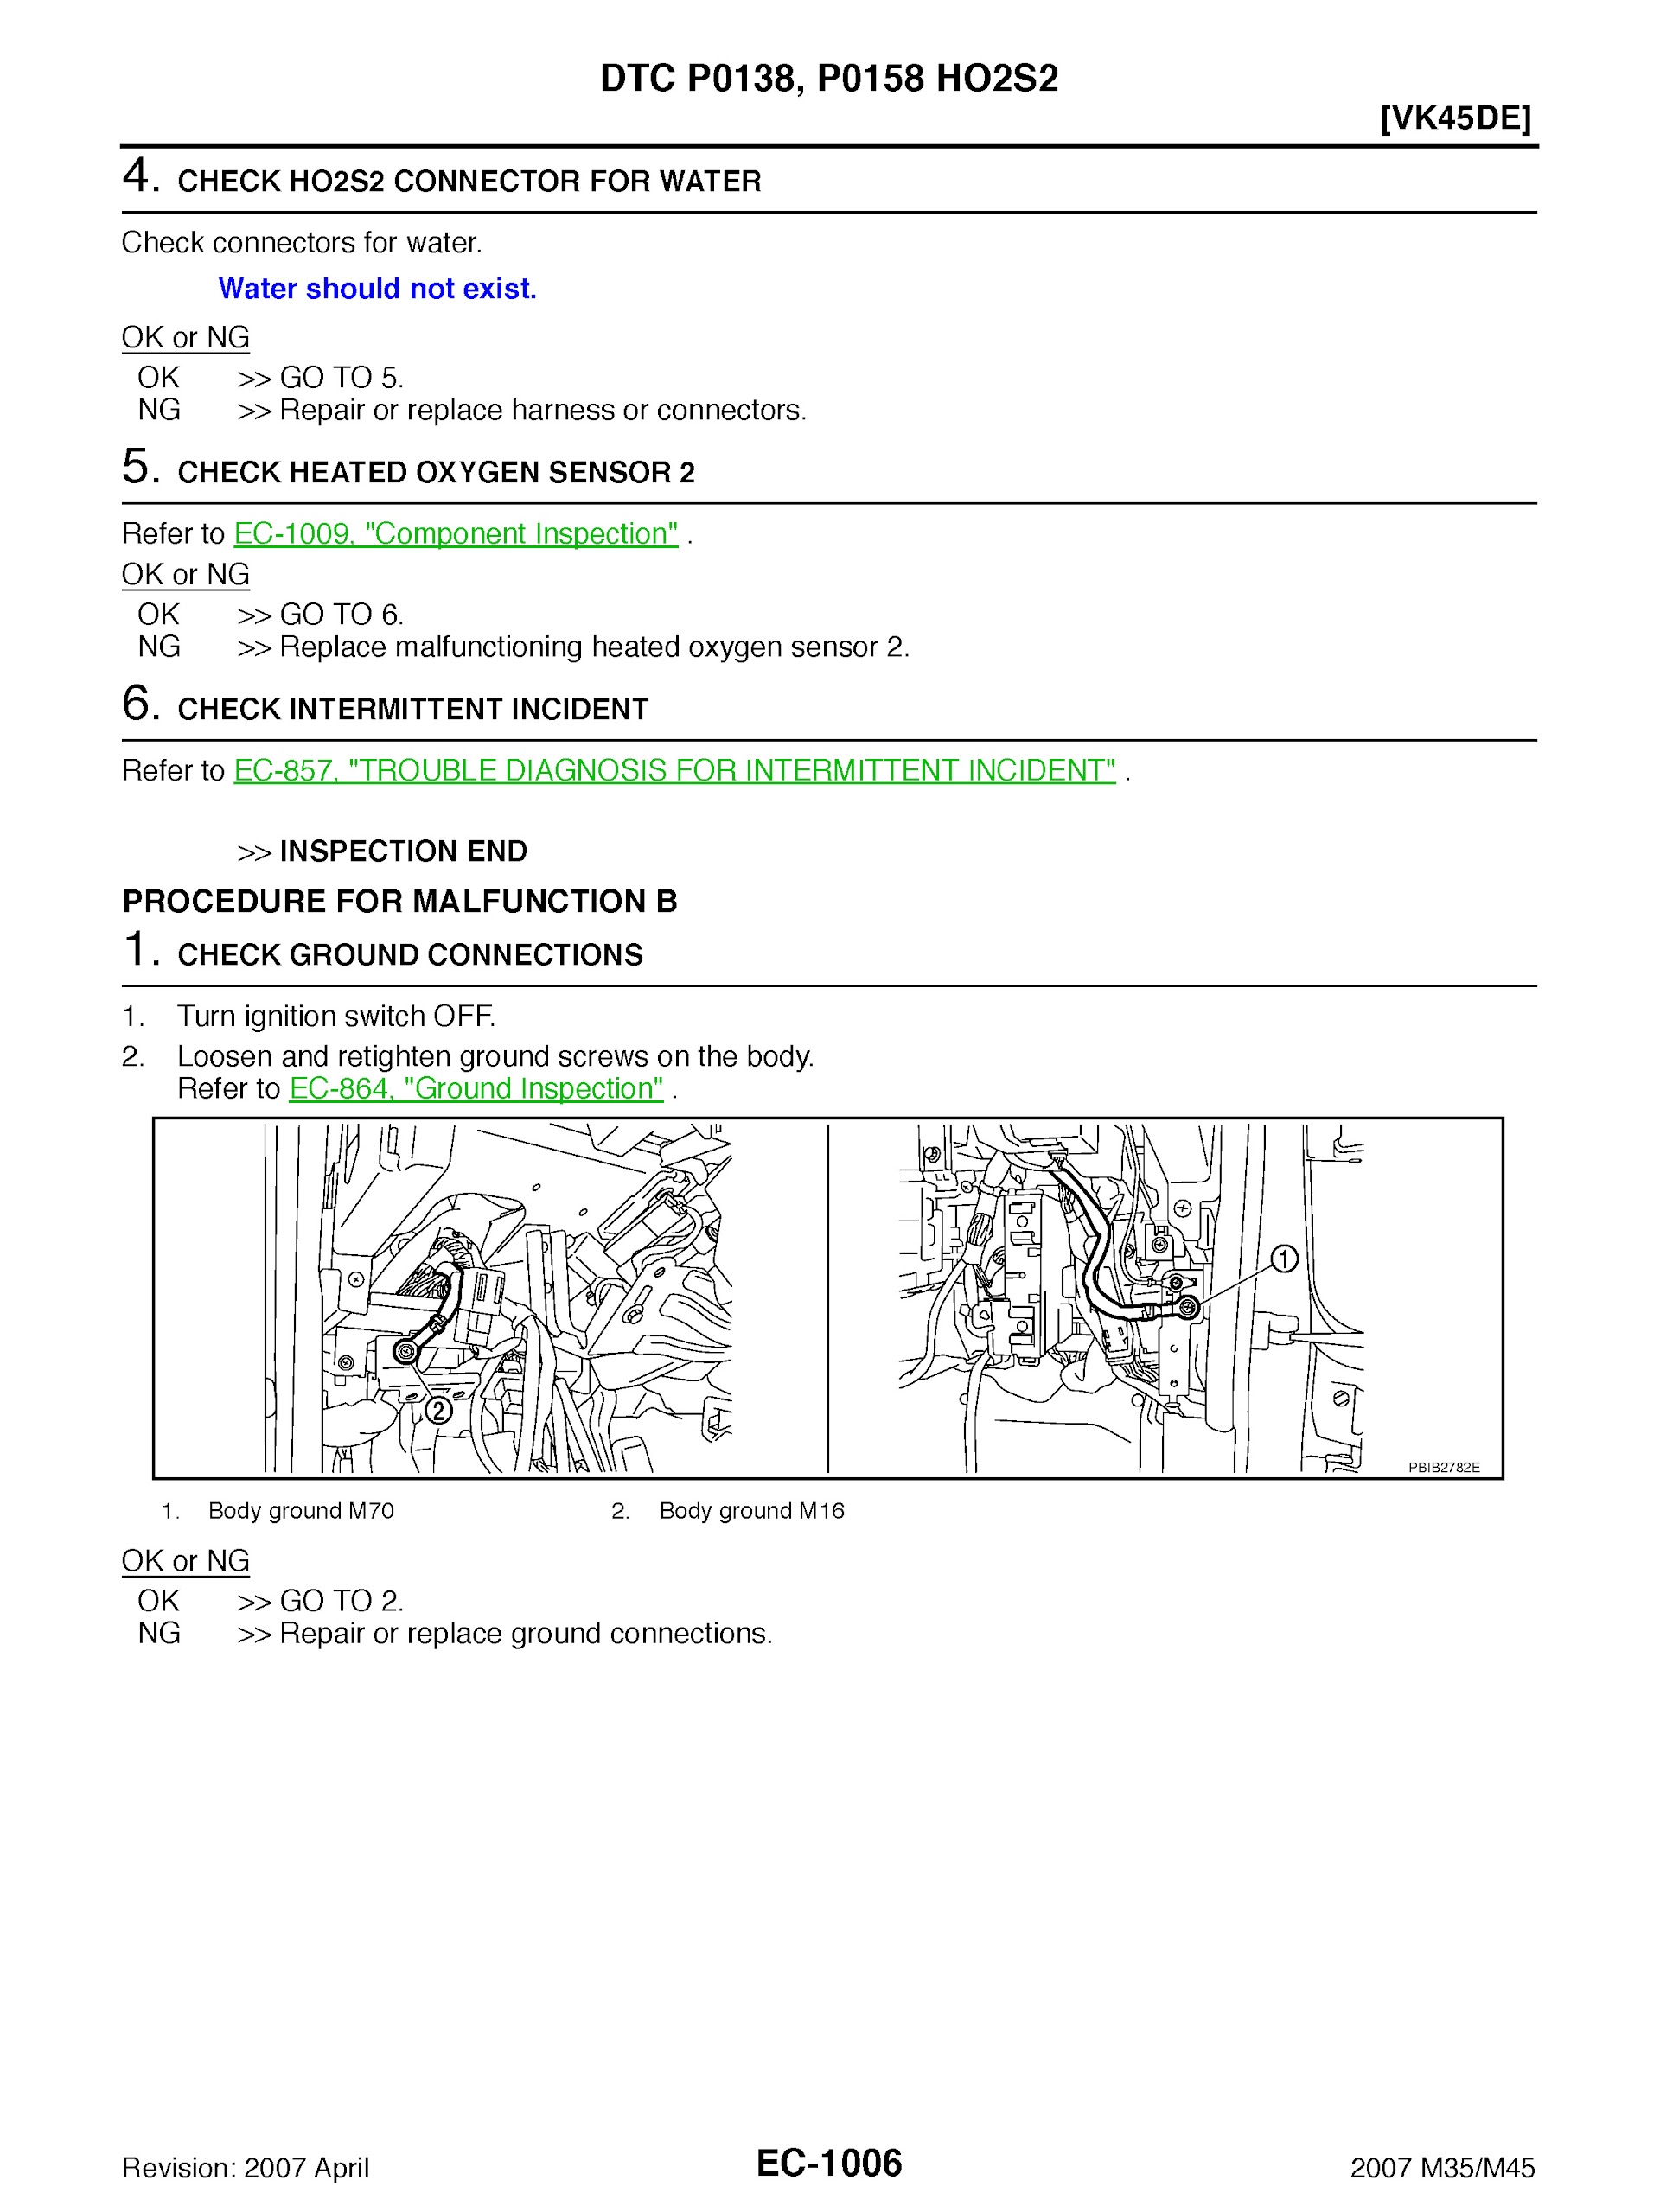 2003-2007 Infiniti M45-M35 Repair Manual, DTC Codes